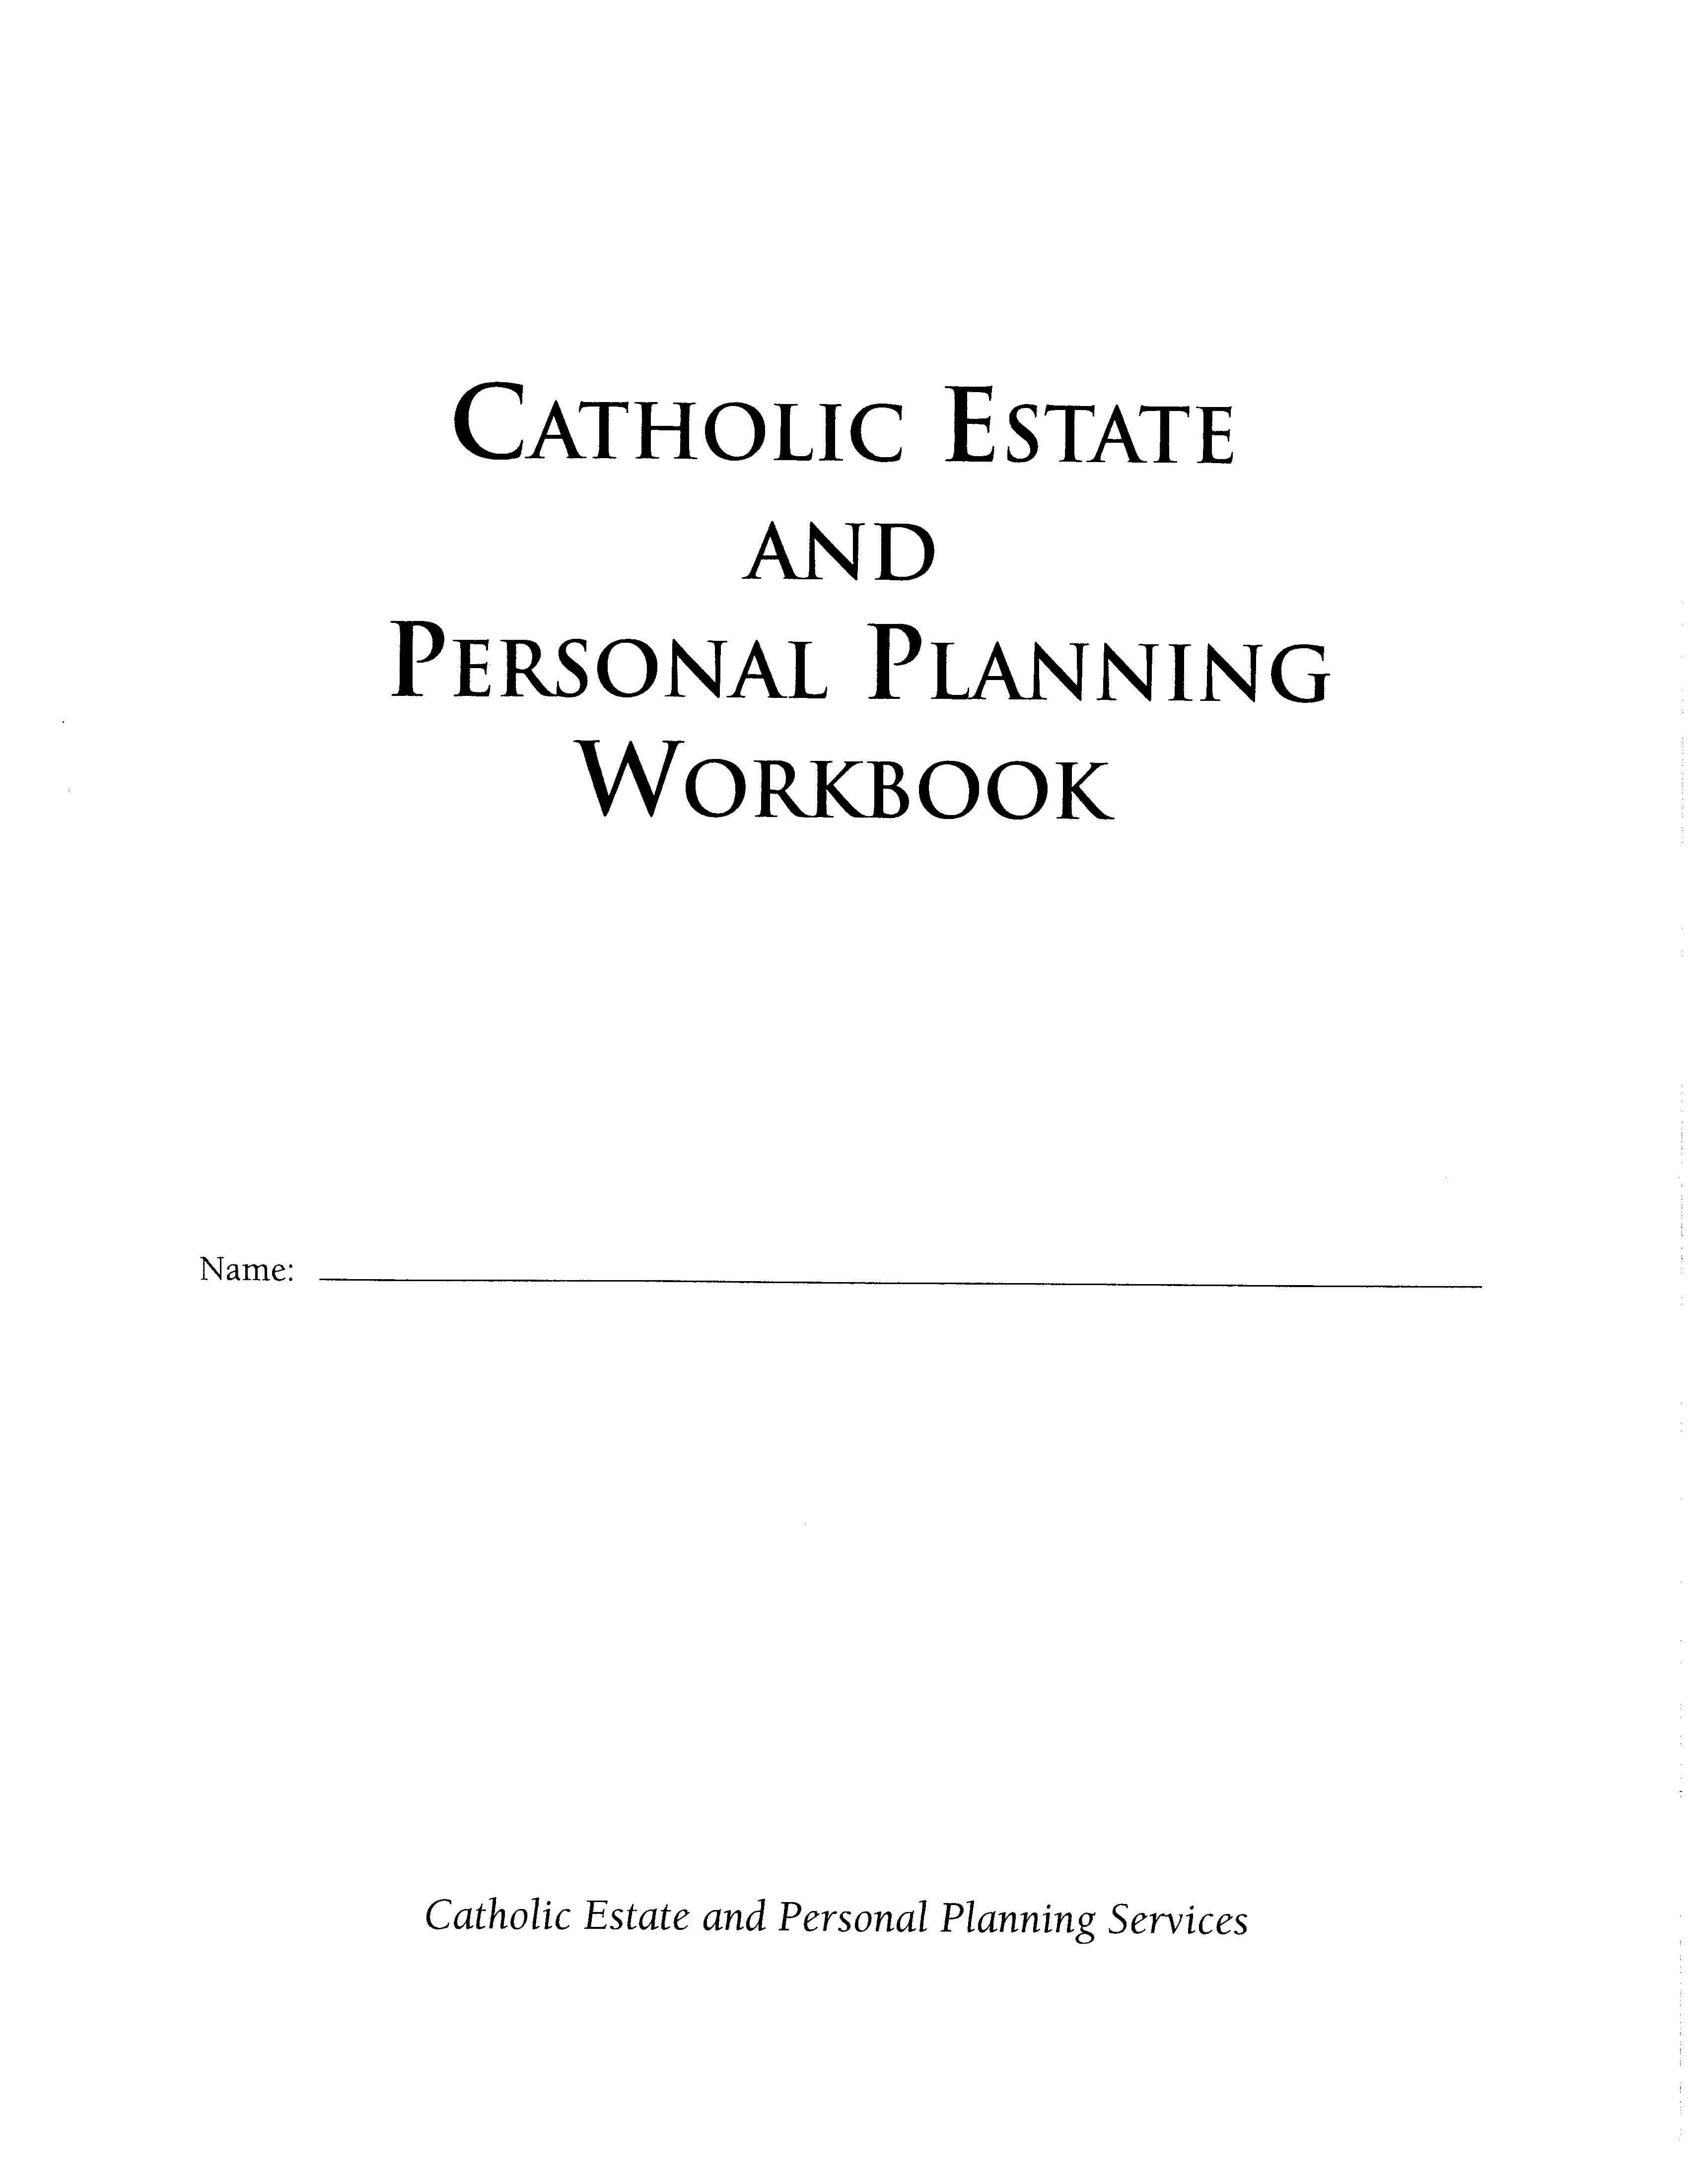 Catholic Estate and Personal Planning Workbook